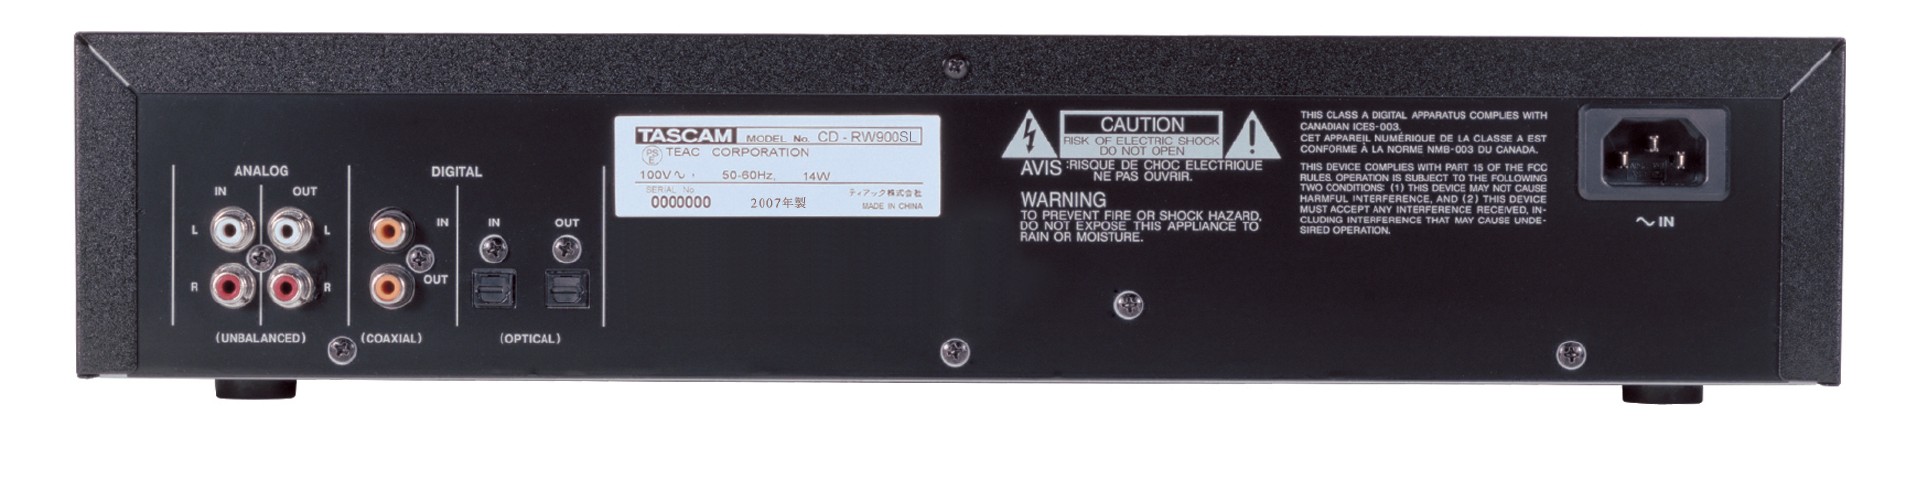 CD-RW900SL | Slot Loading CD Recorder | TASCAM - United States